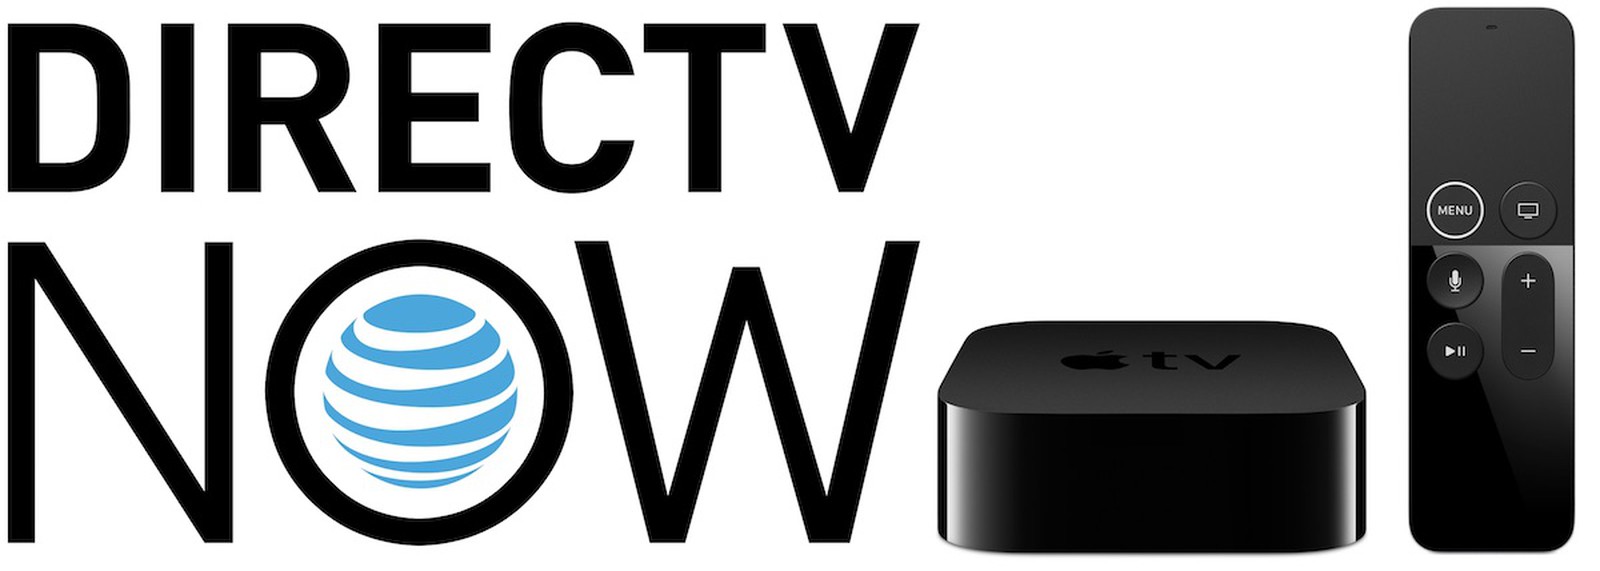 directv app on apple tv